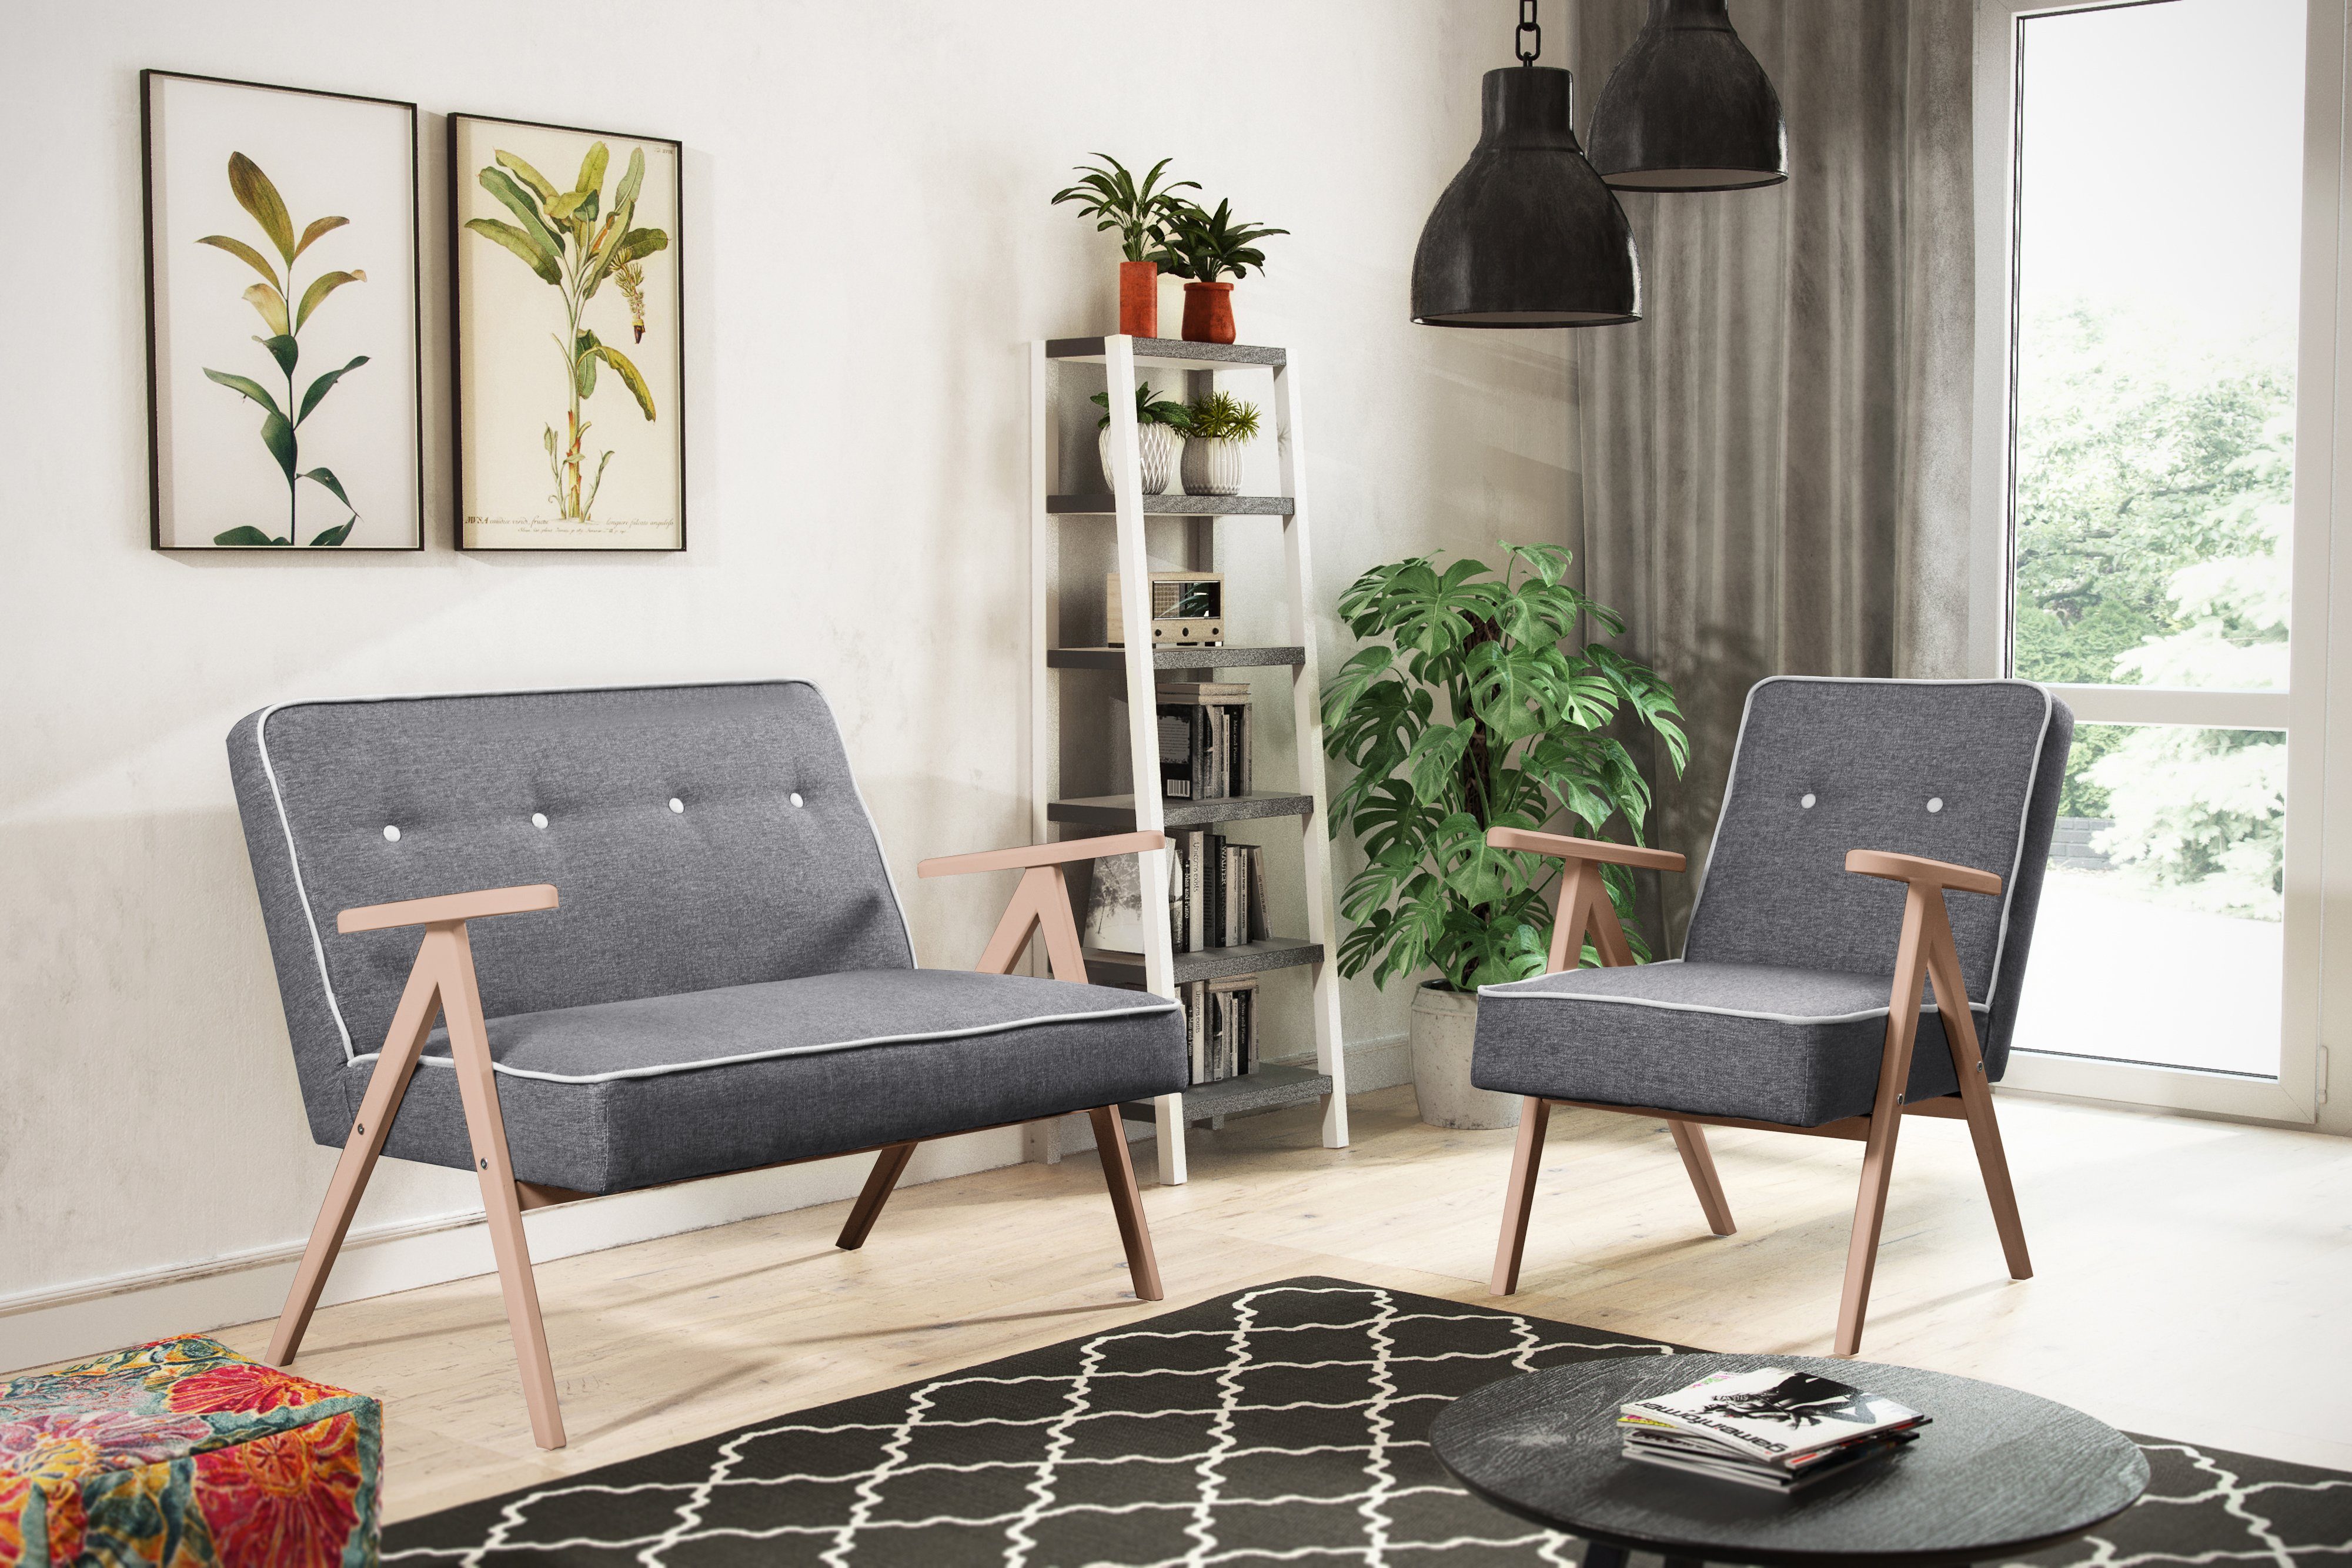 Beautysofa Polstergarnitur ADEL, Set besteht aus 2-Sitzer Sofa und 2x Sessel, inklusive Wellenfedern Dunkelgrau (softi 11 + softi 08)